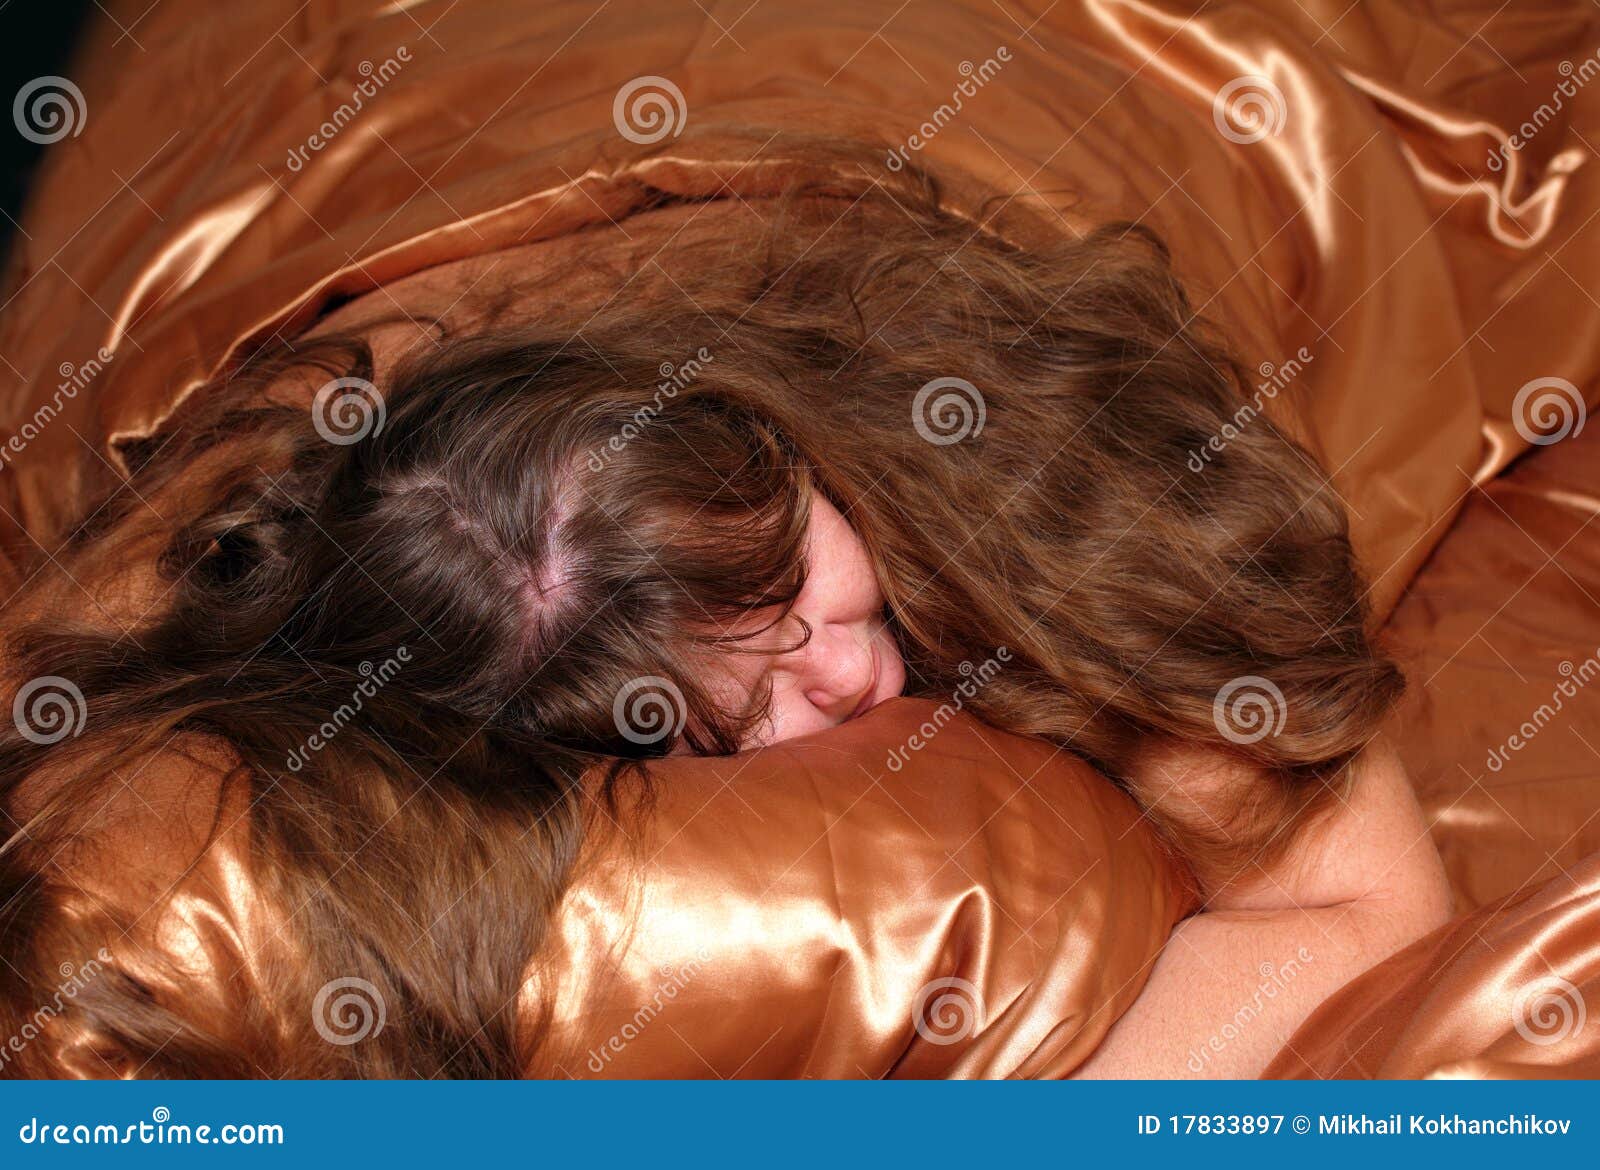 539 Sleeping Women Long Hair Stock Photos - Free & Royalty-Free Stock  Photos from Dreamstime